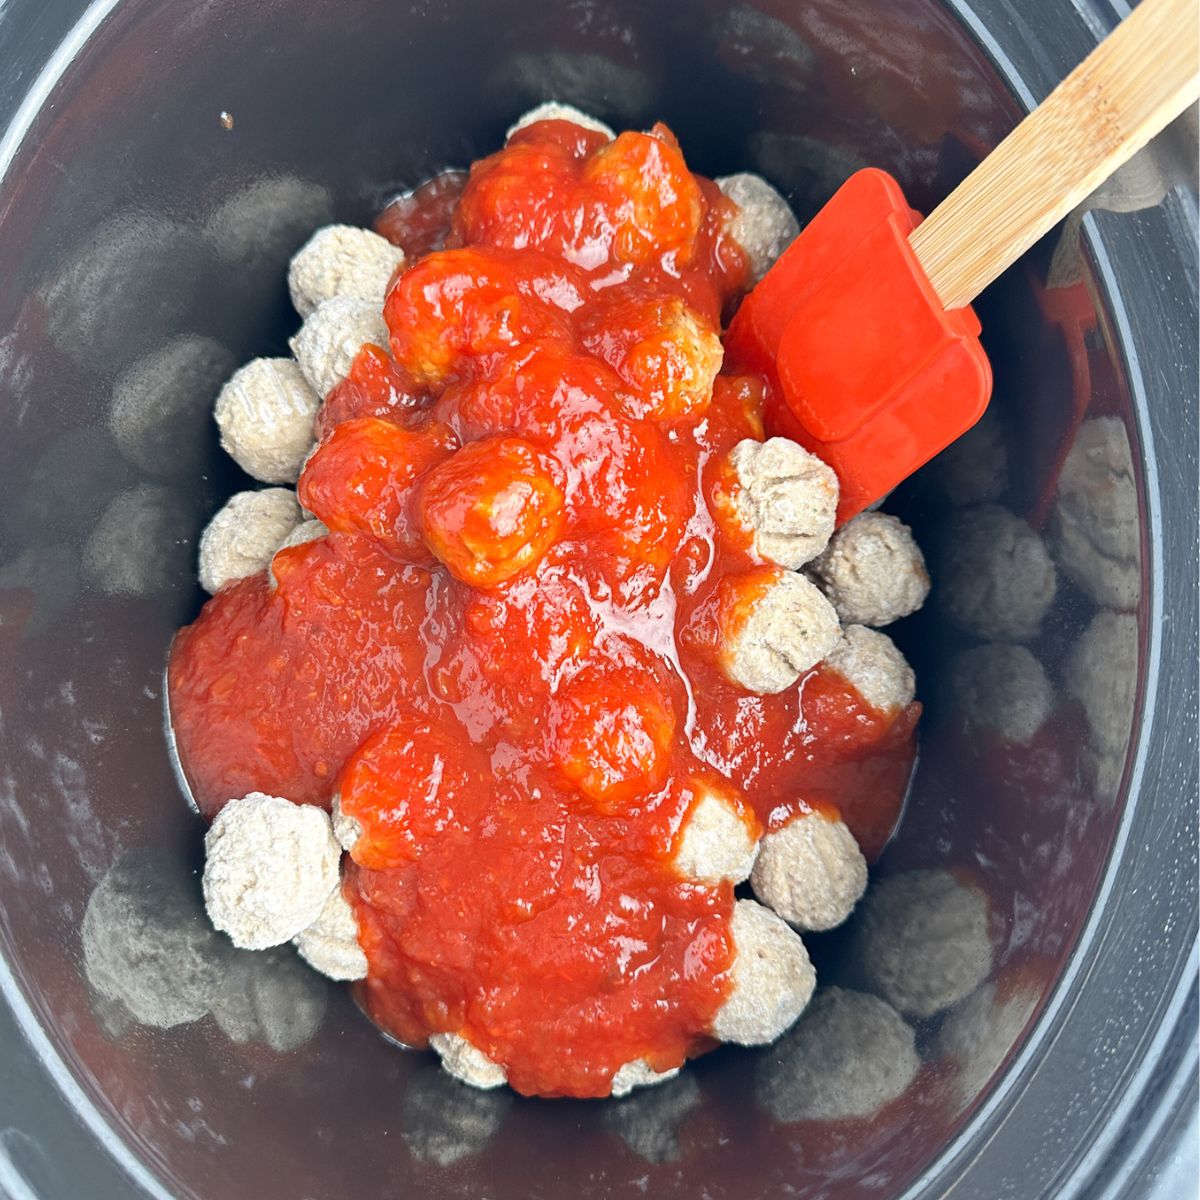 Frozen meatballs in slow cooker with sauce. 